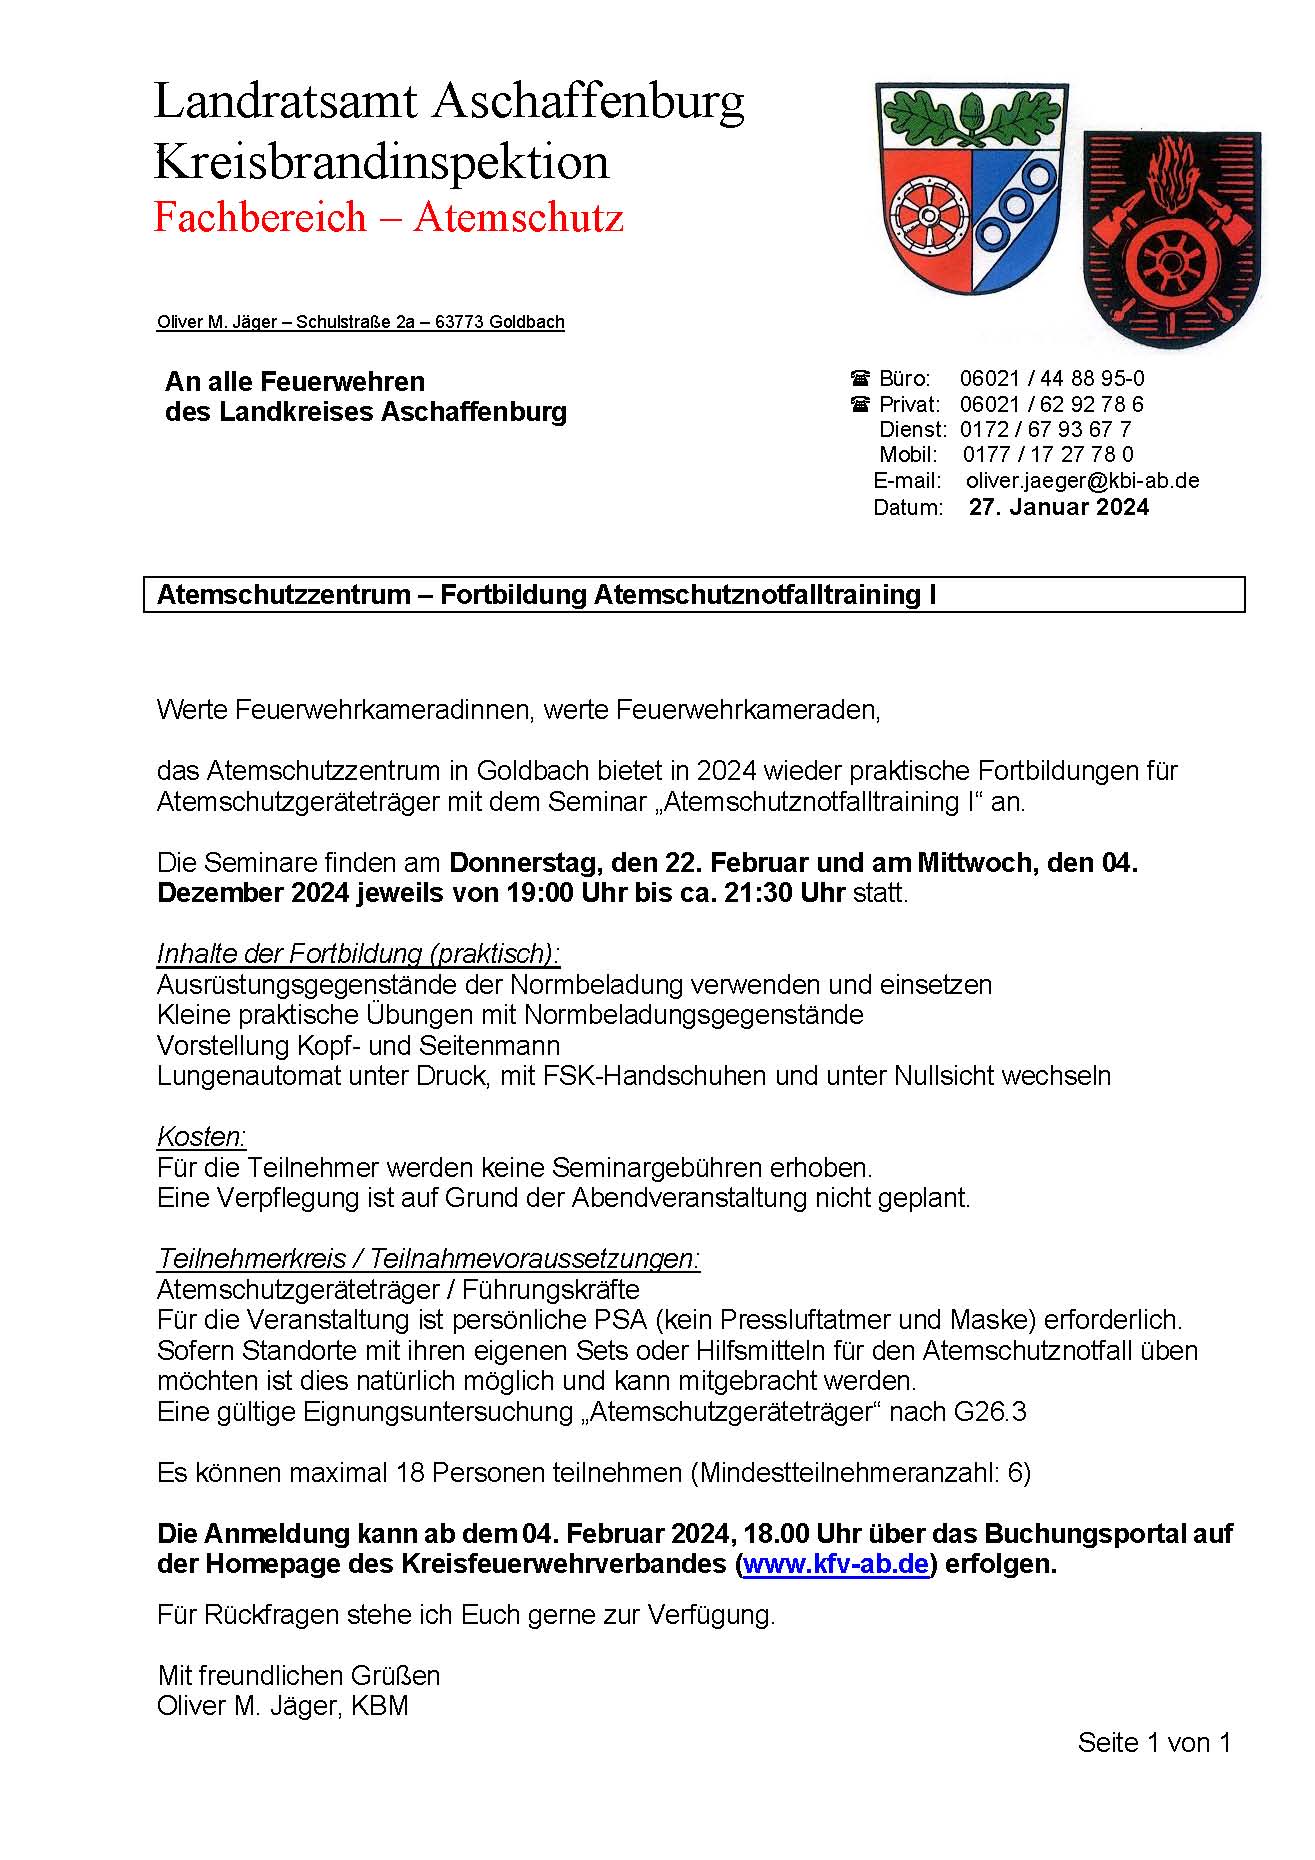 Einladung ASZ Fortbildung Atemschutznotfalltraining I 2024